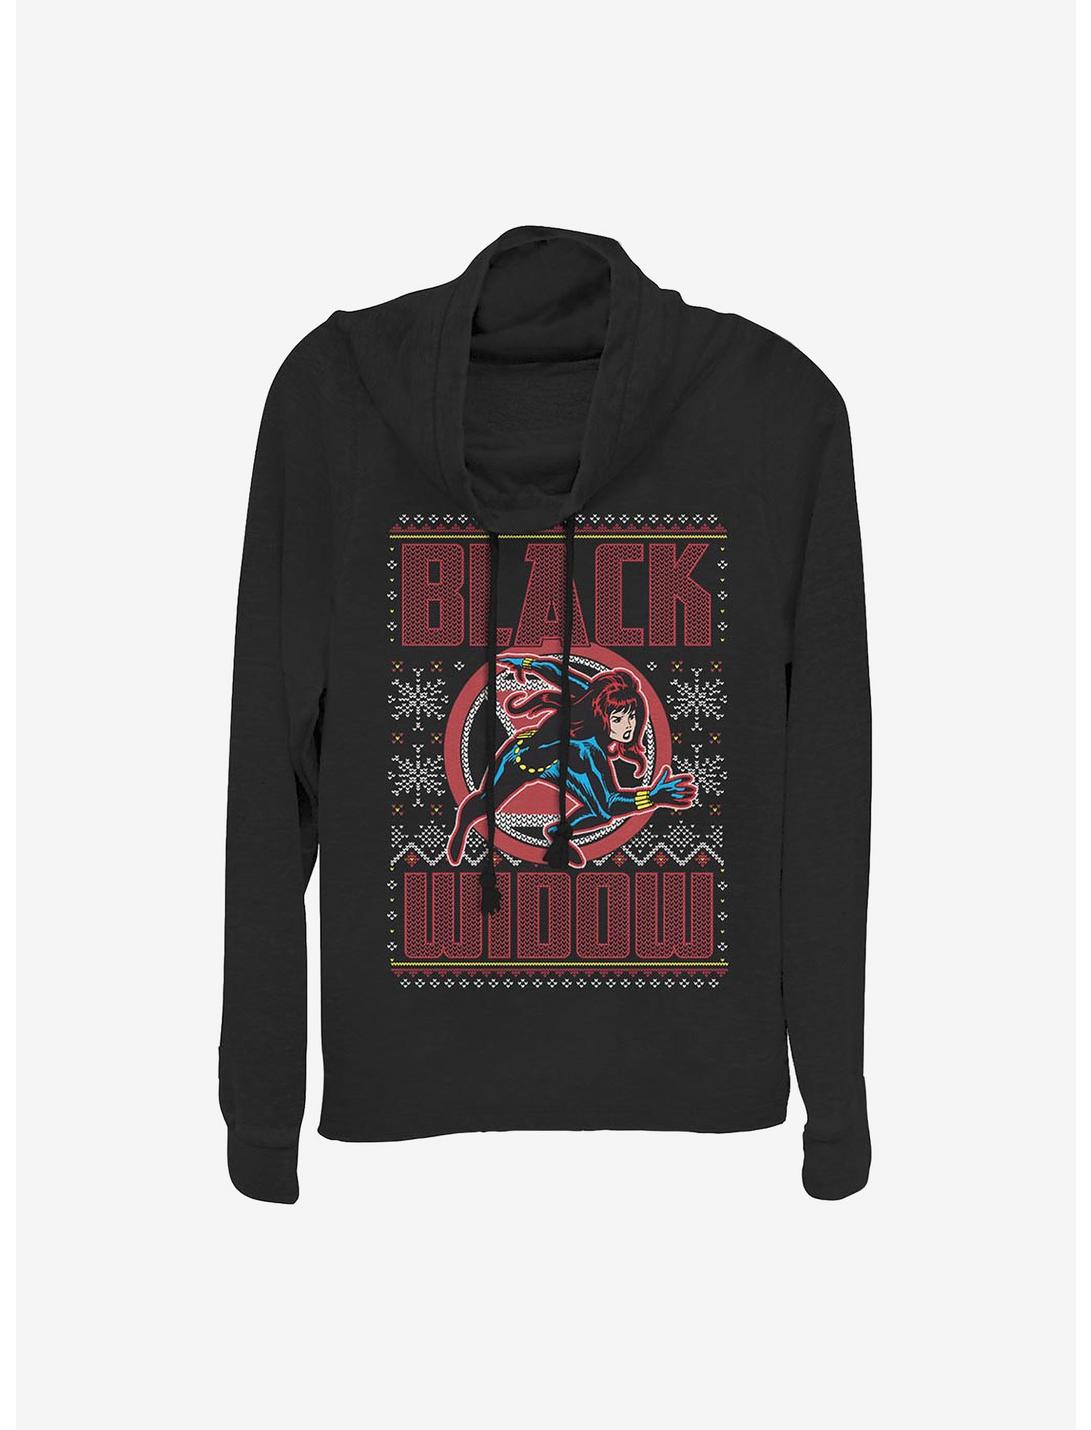 Marvel Black Widow Holiday Sweater Cowlneck Long-Sleeve Girls Top, BLACK, hi-res